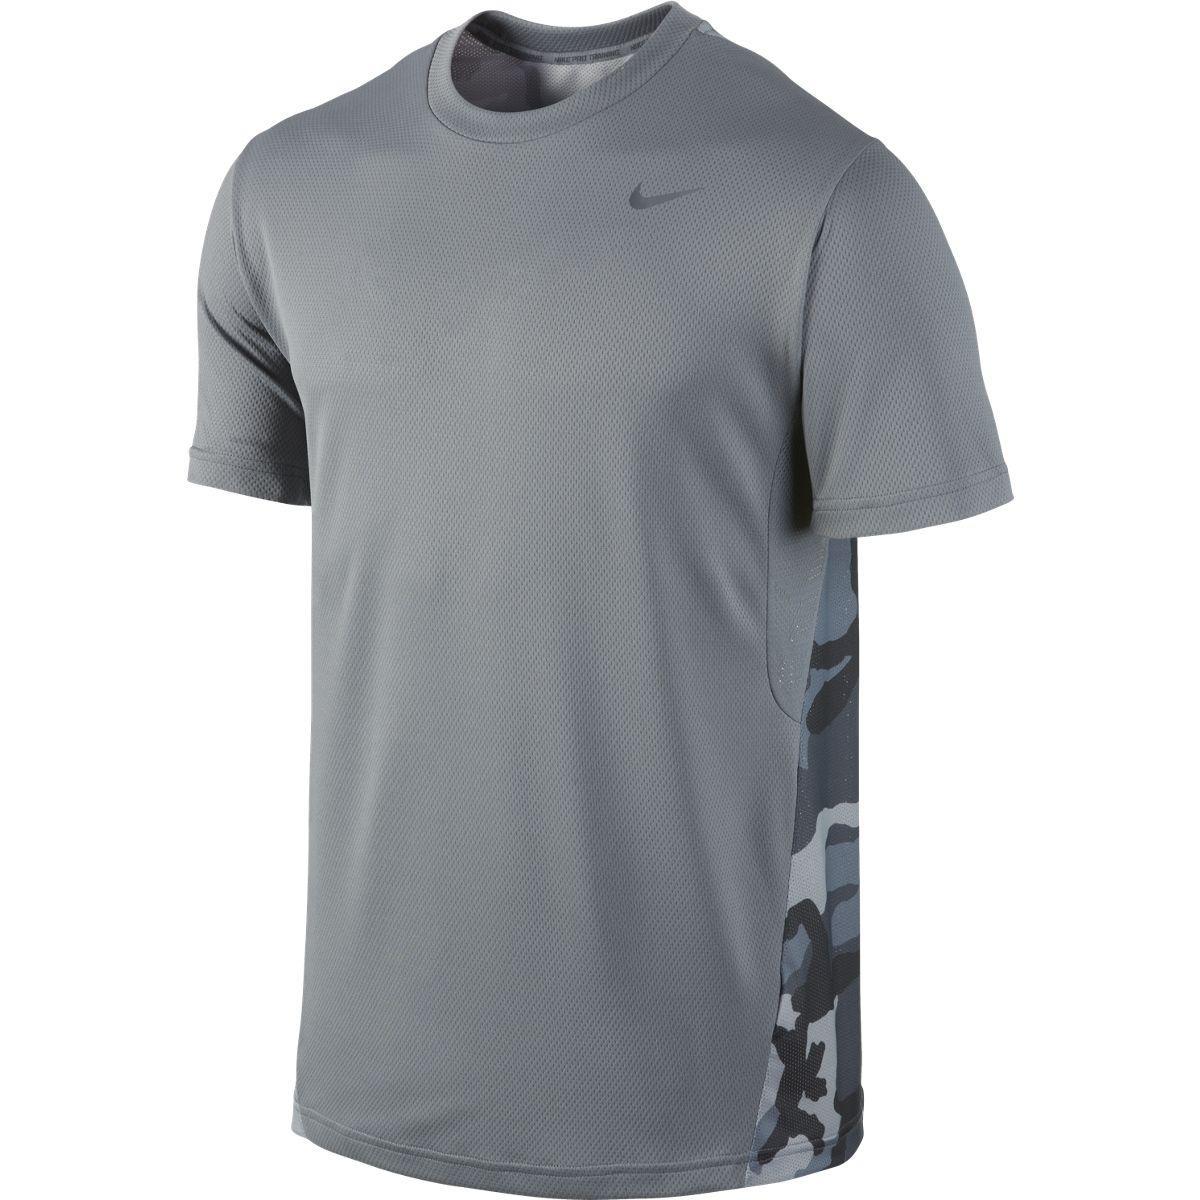 Nike Mens Vapor Dri-FIT Short Sleeve Shirt - Cool Grey/Camo ...